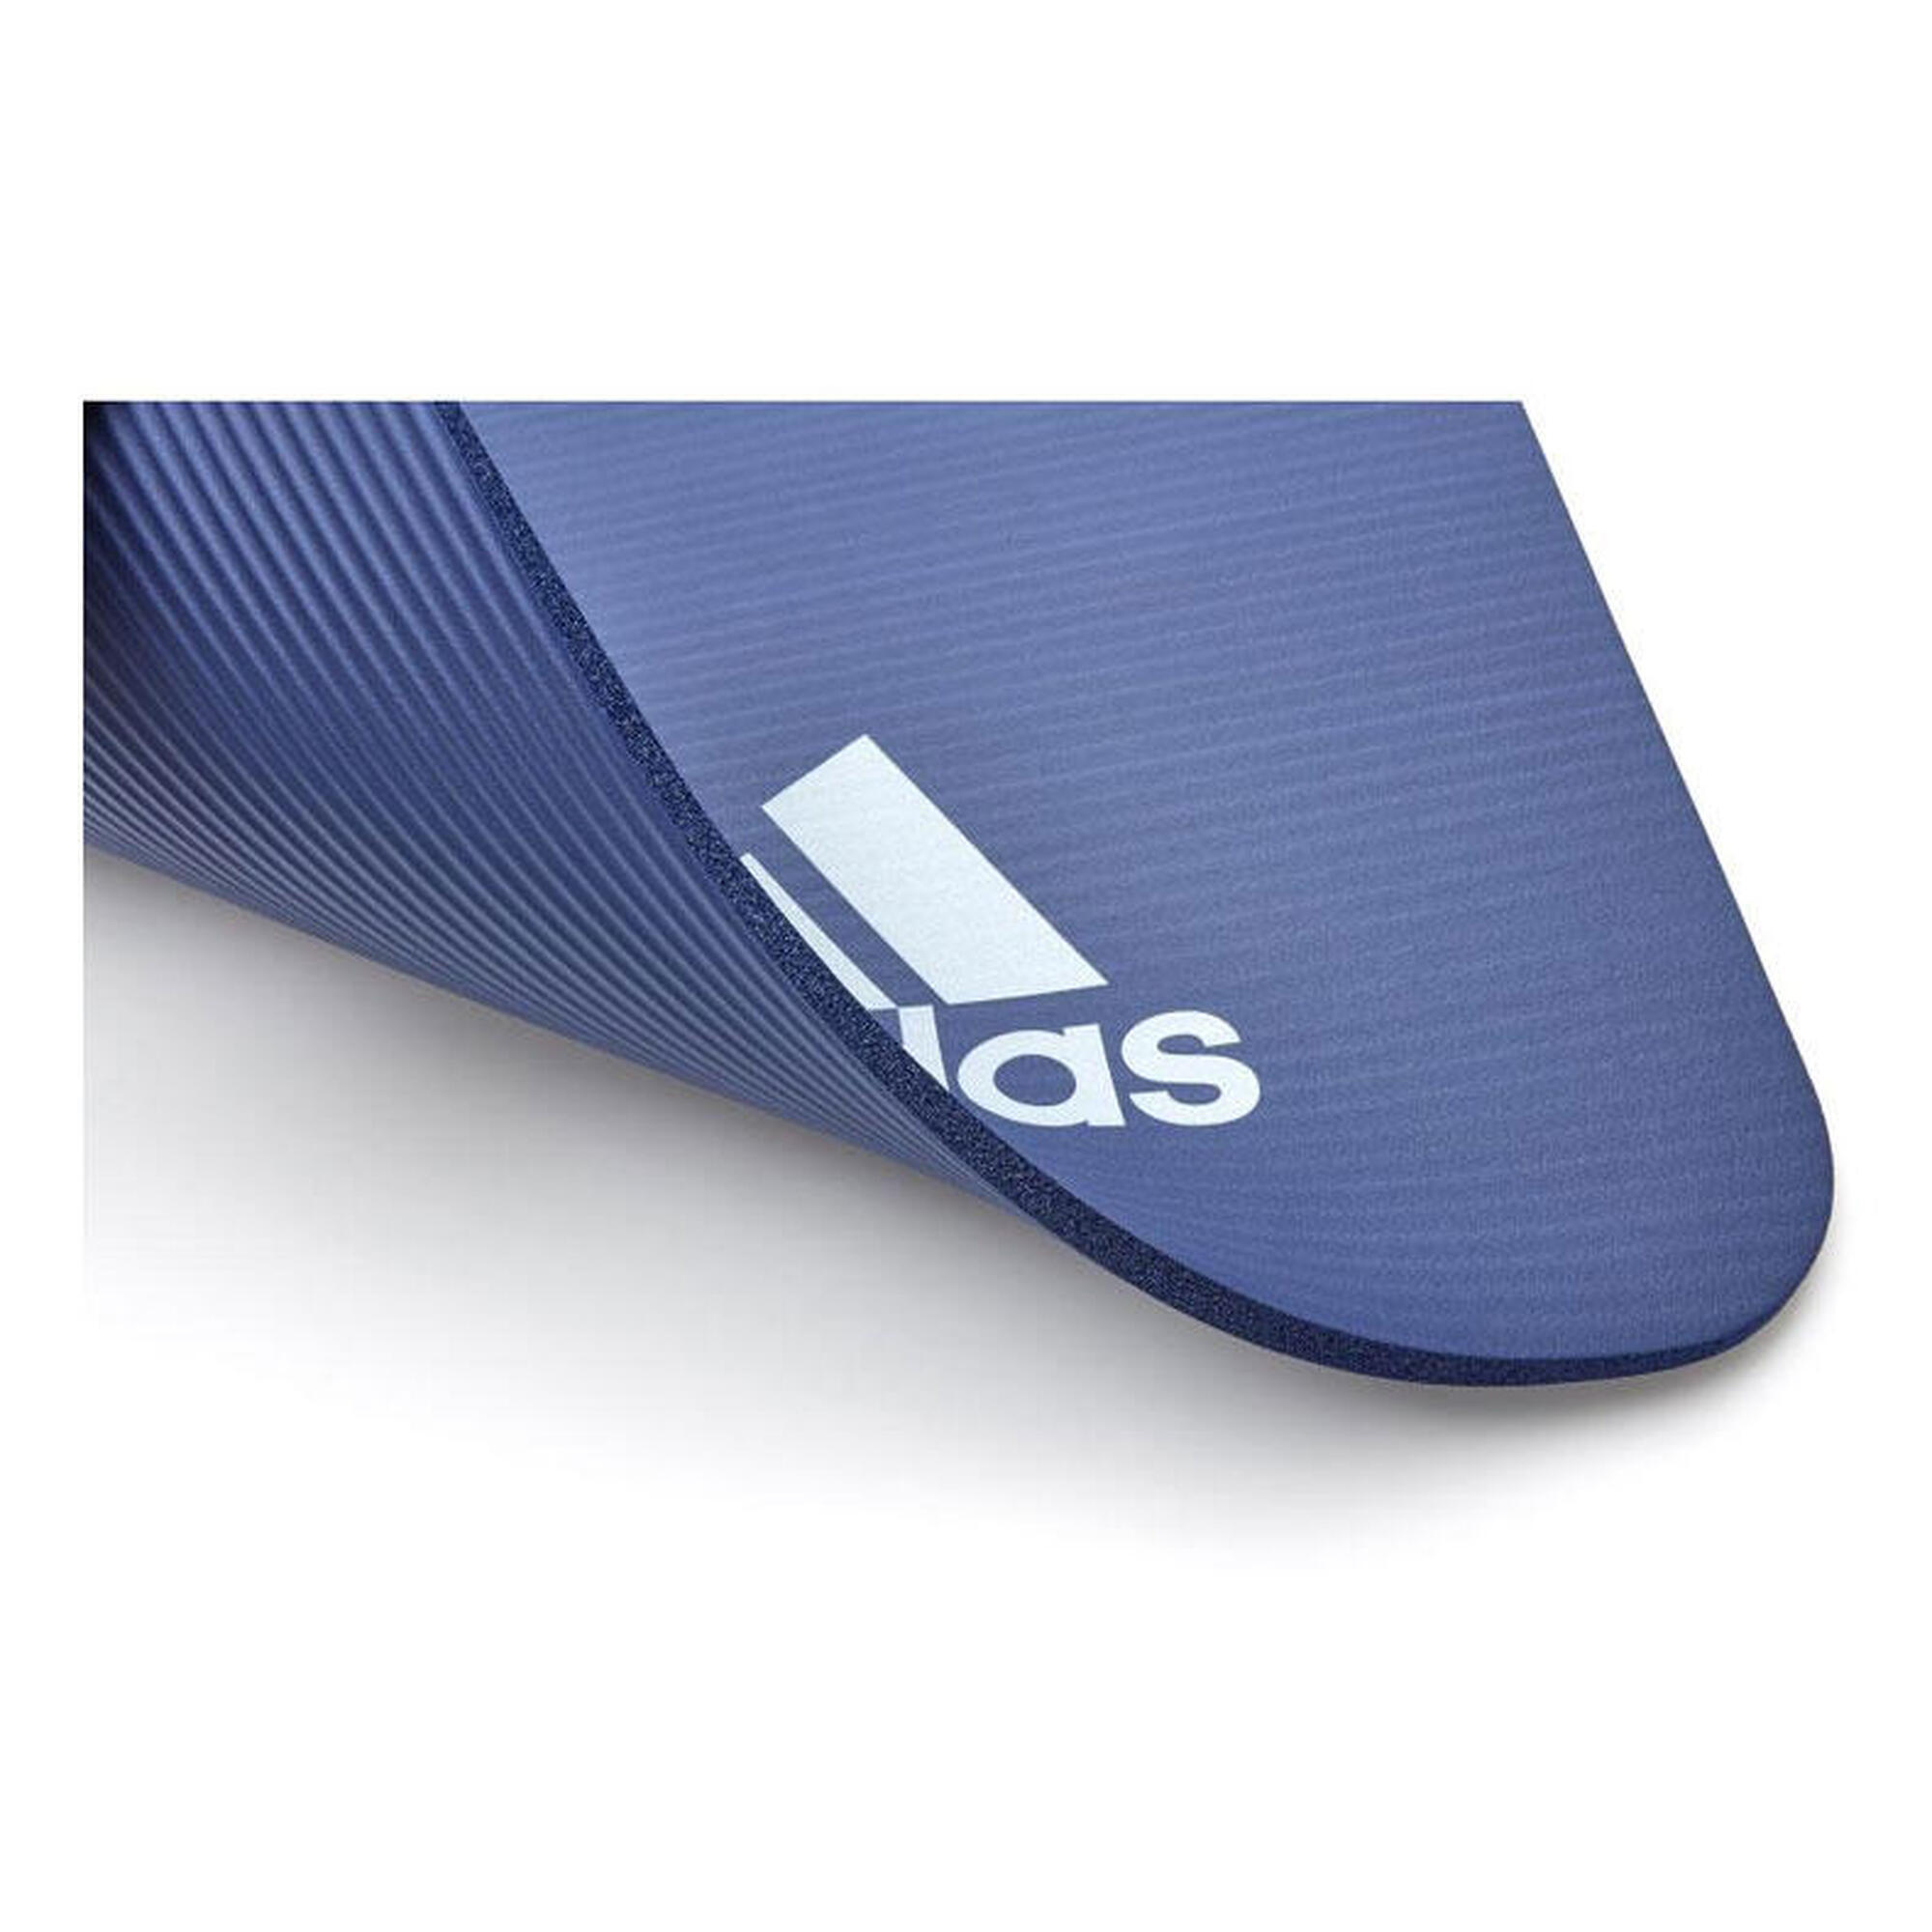 Tappetino di fitness Adidas - 10mm - Blu